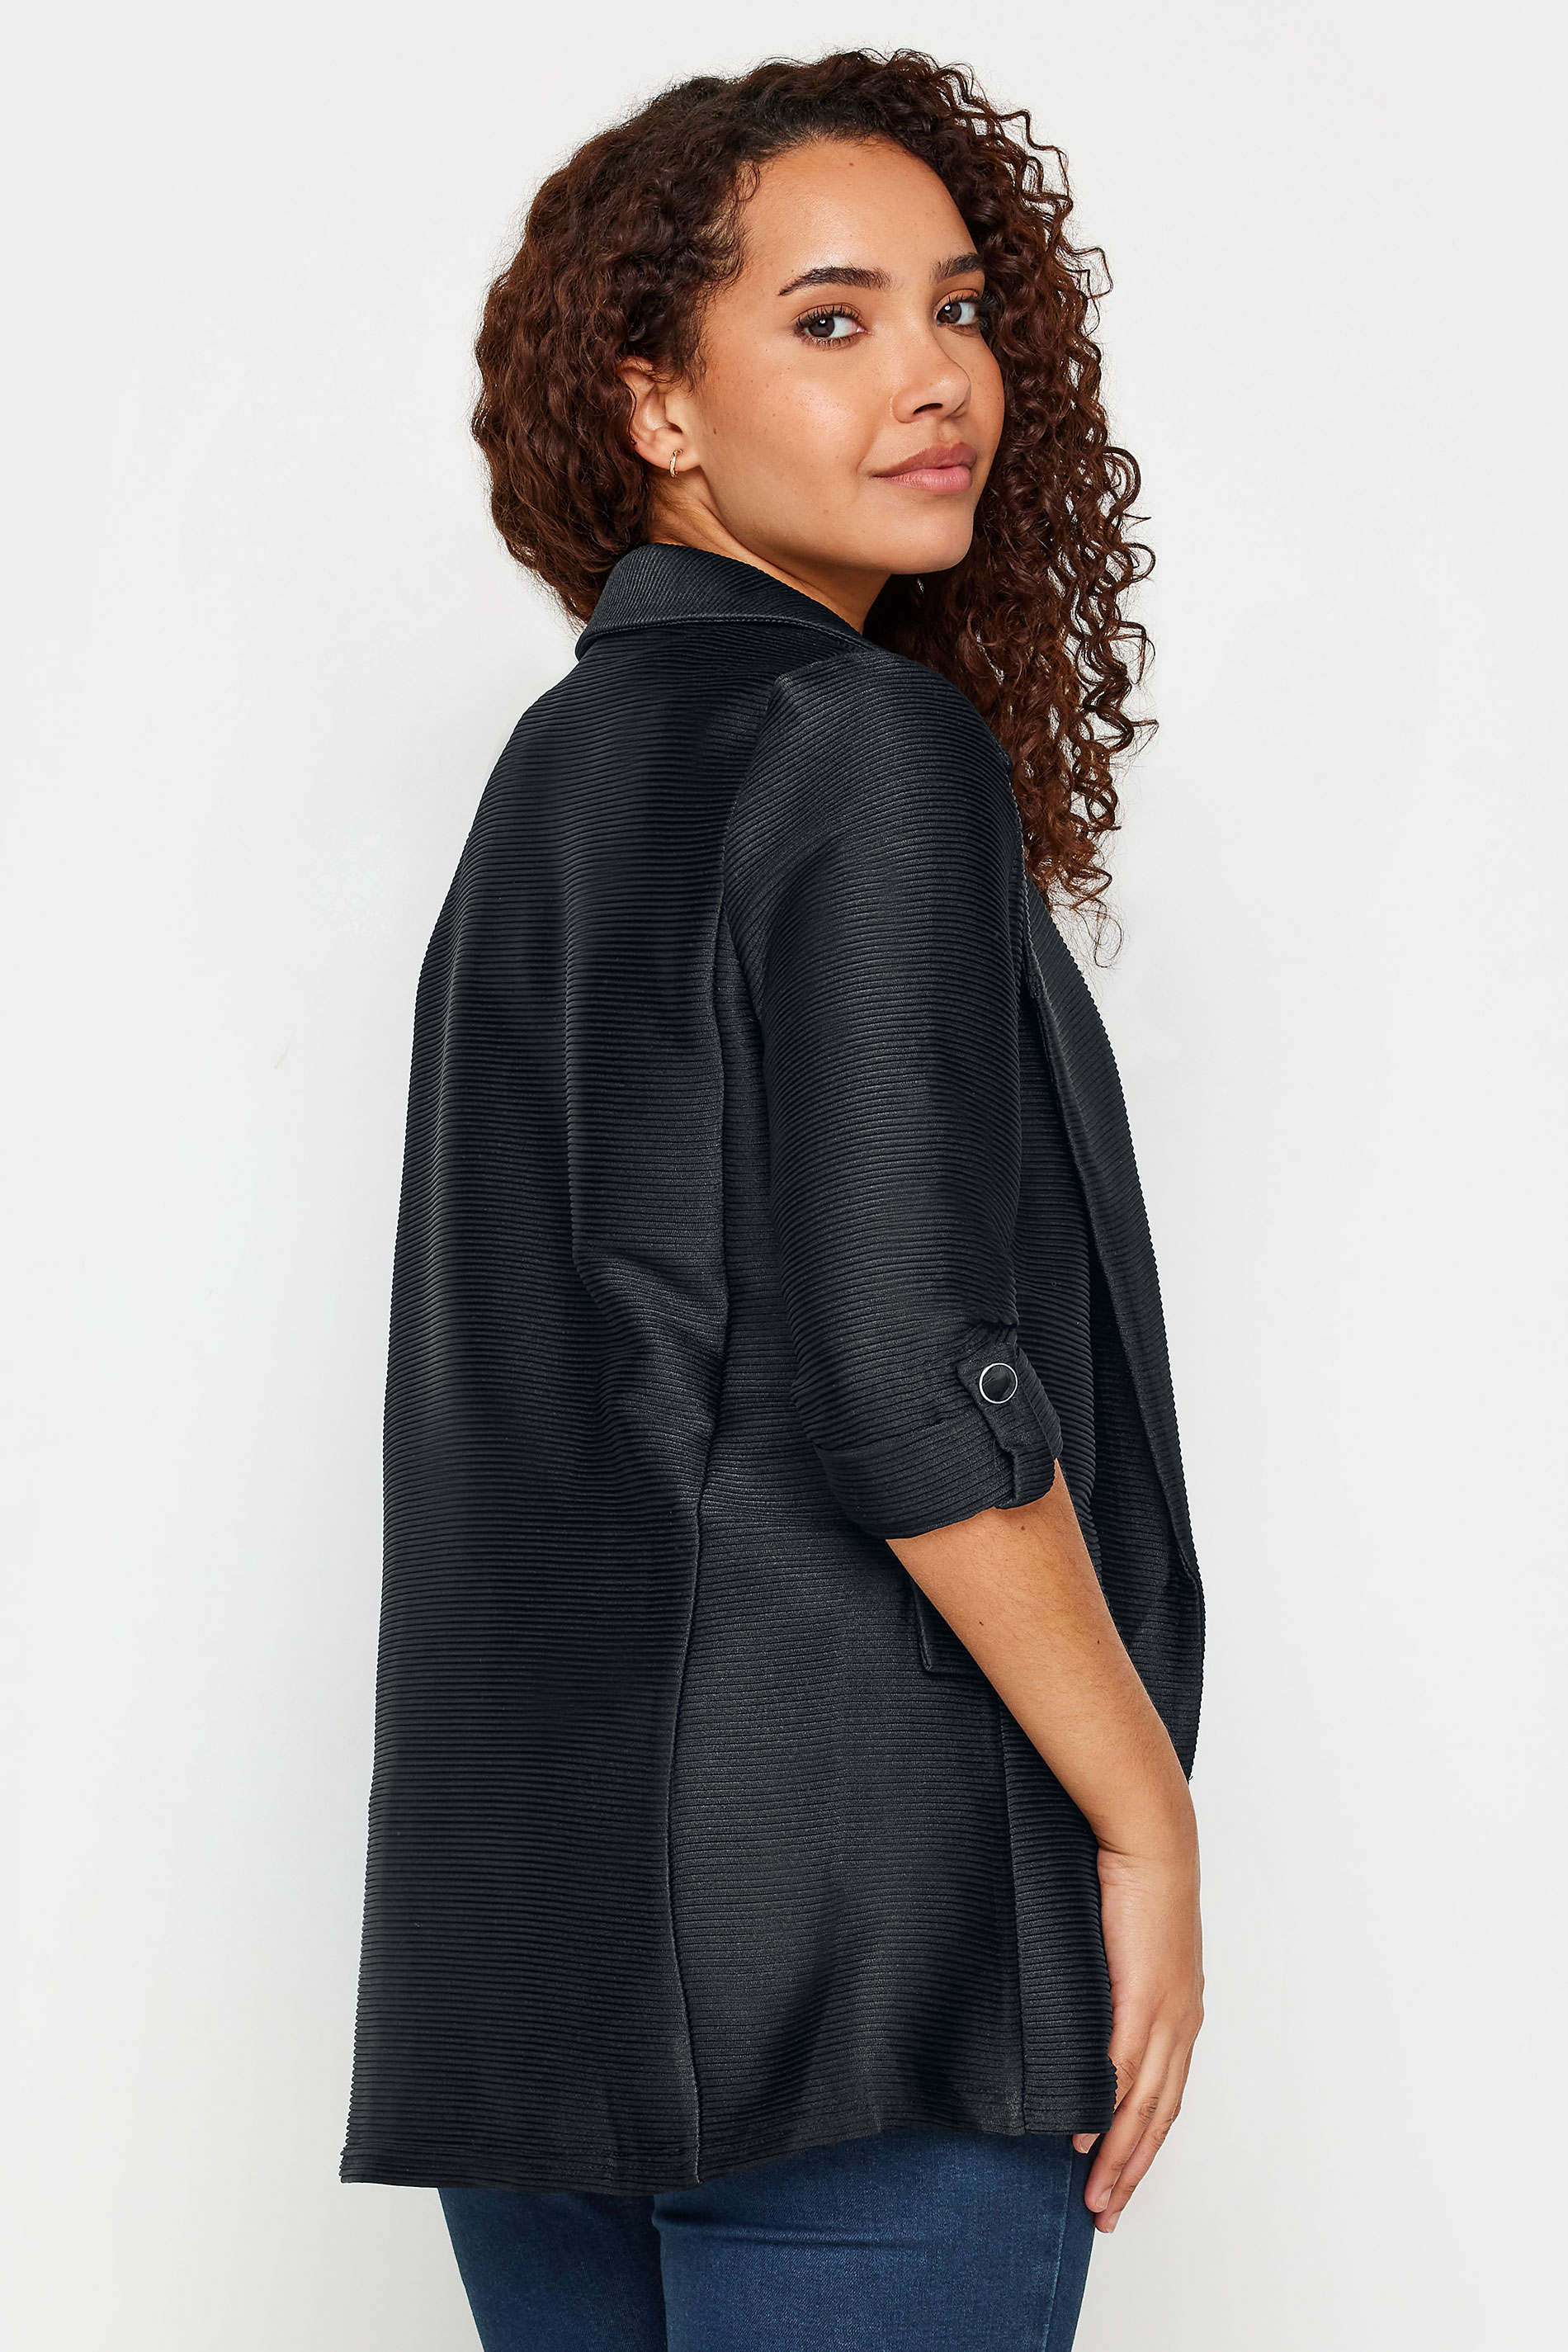 M&Co Black Textured Blazer Jacket | M&Co 3